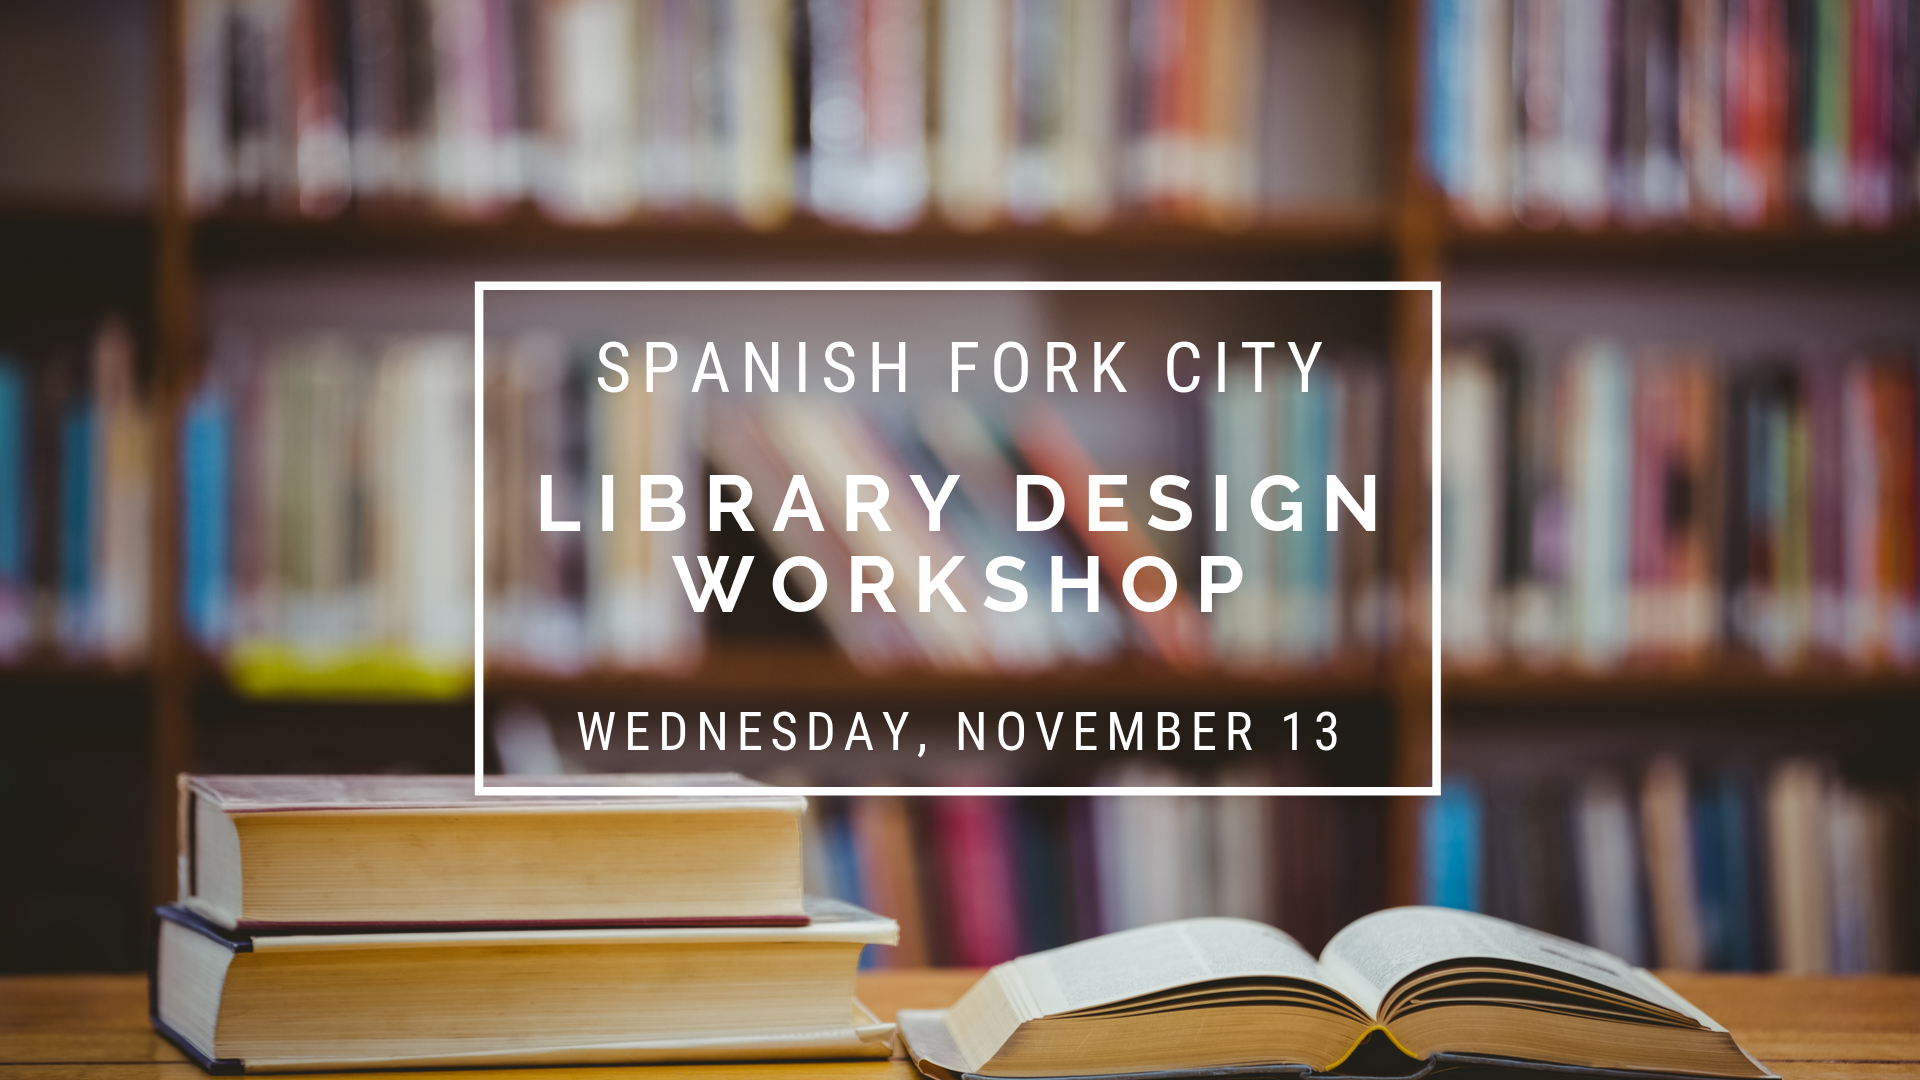 Photo of bookshelf. Text overlay: Spanish Fork City Library Design Workshop. Wednesday, November 13.